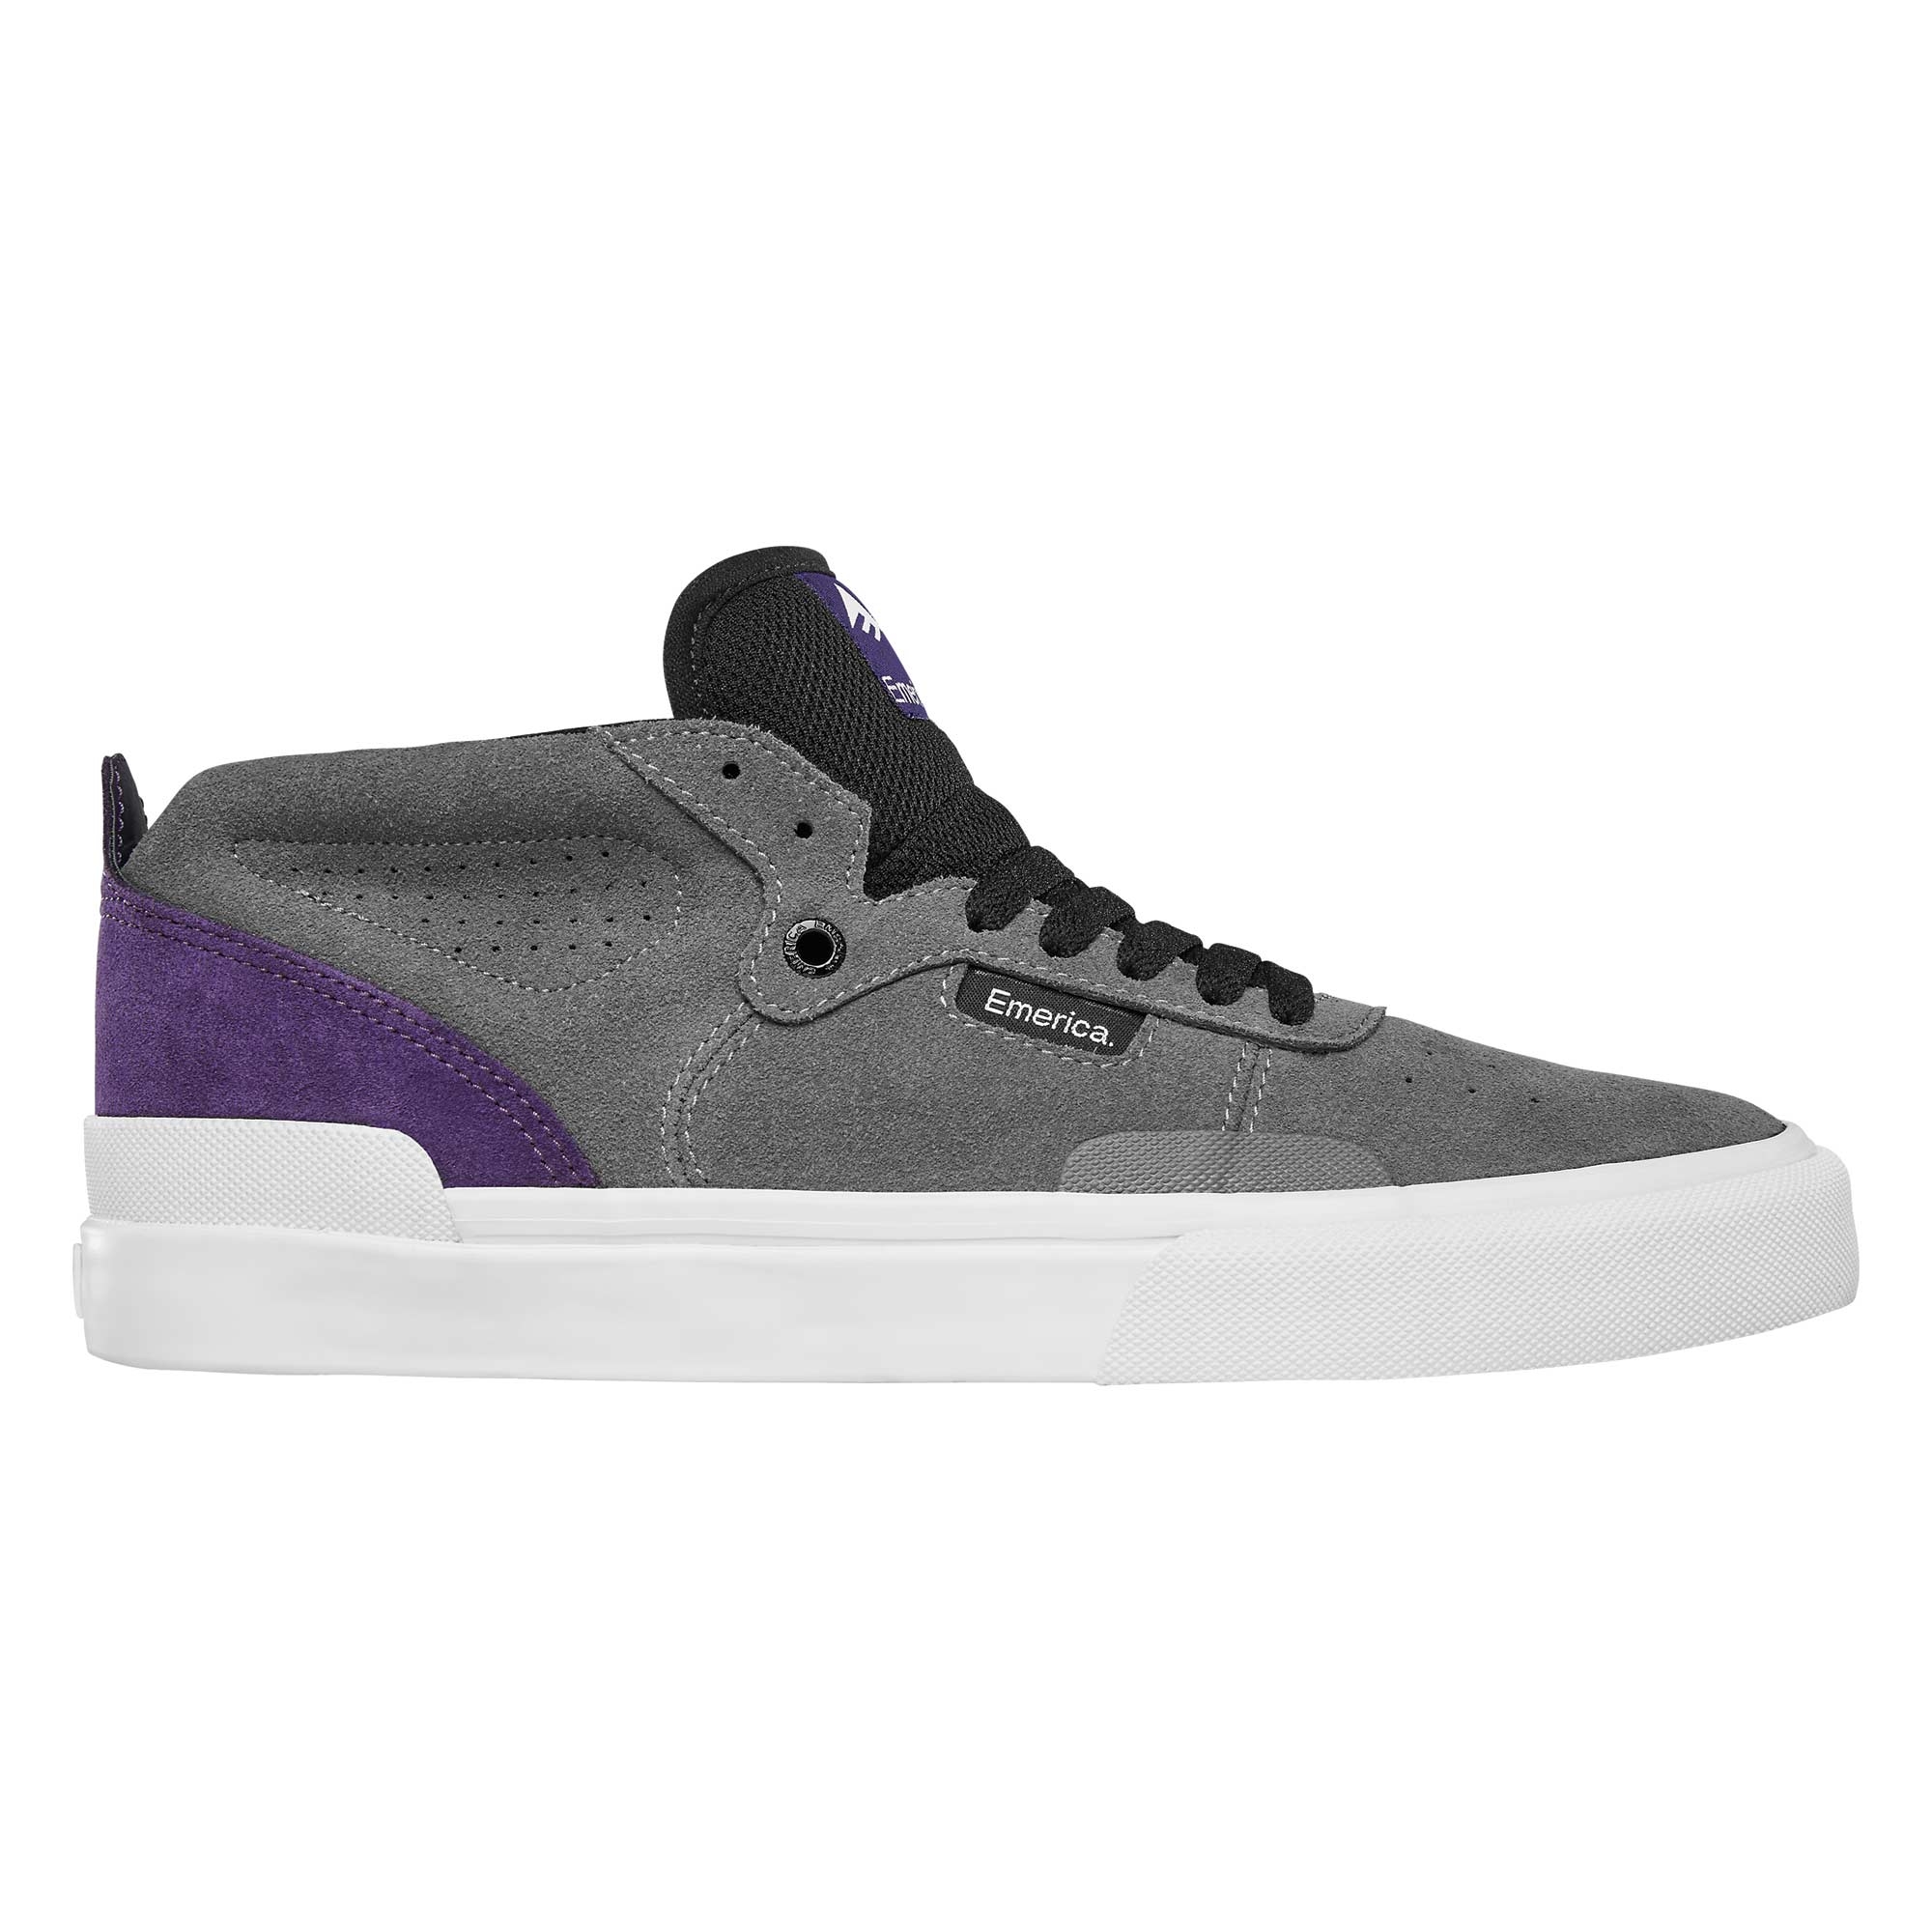 EMERICA Shoe PILLAR gry/pur grey/purple